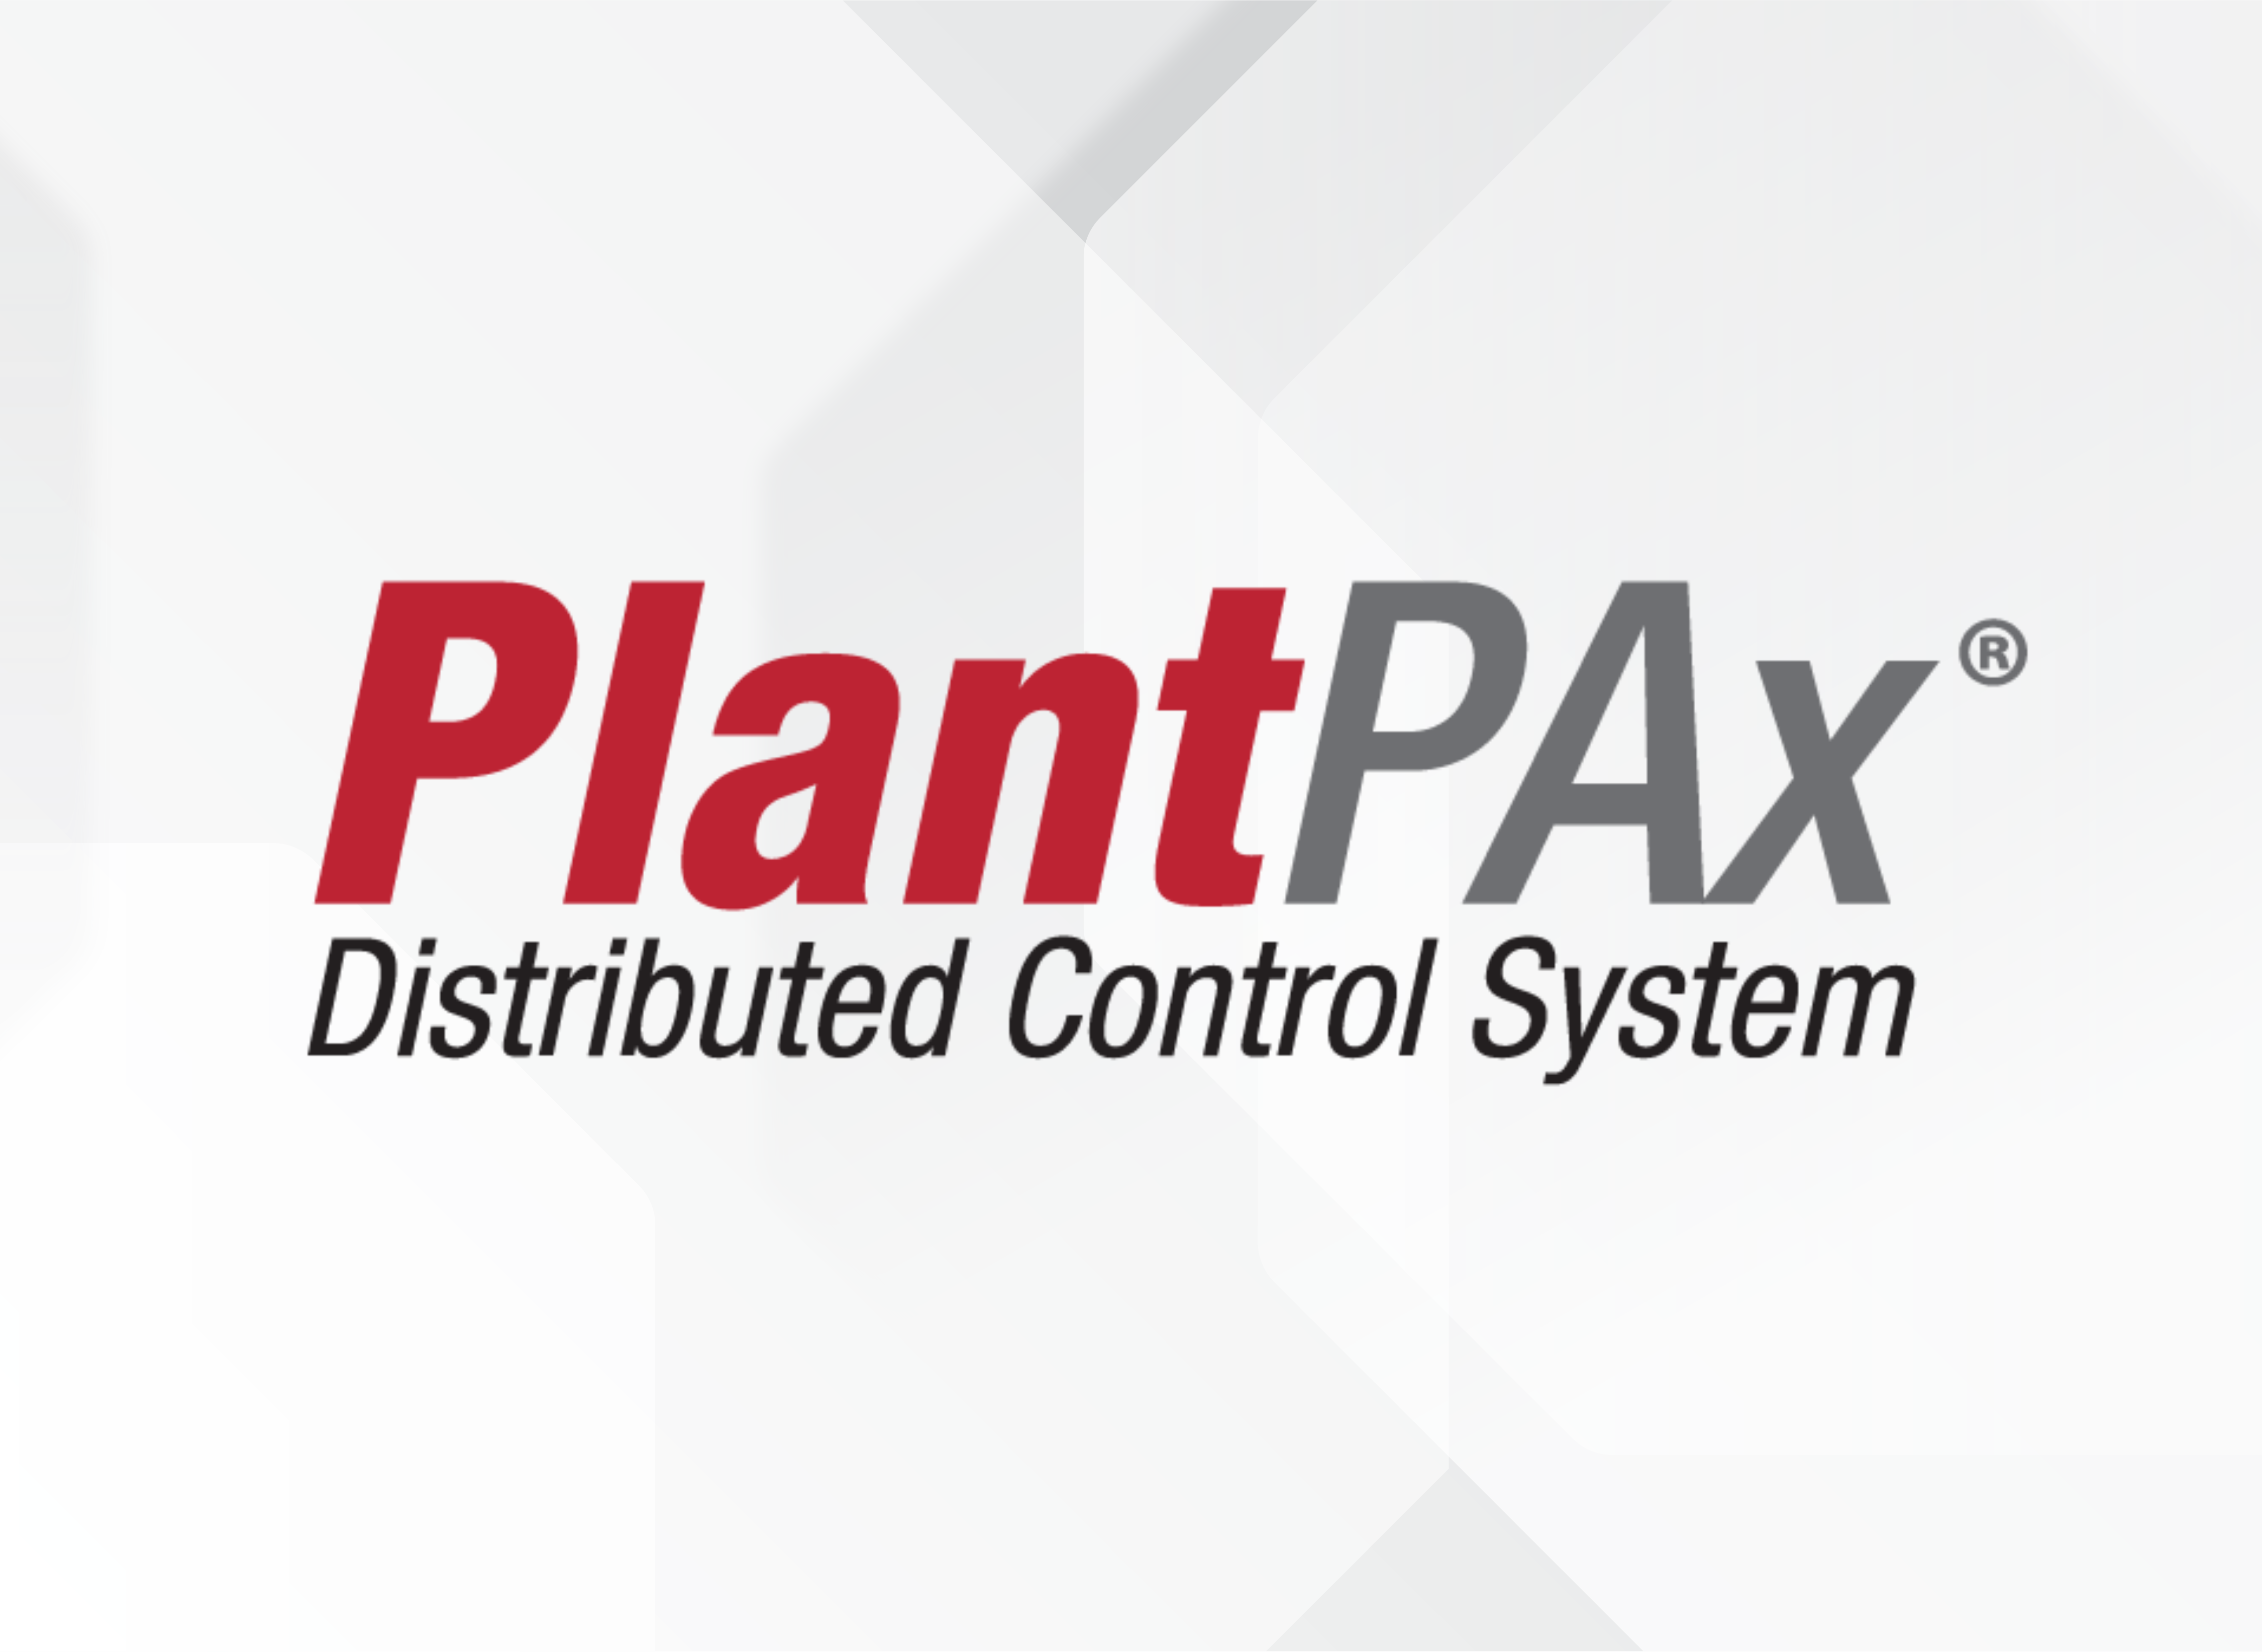 PlantPAx Analytics Private Cloud